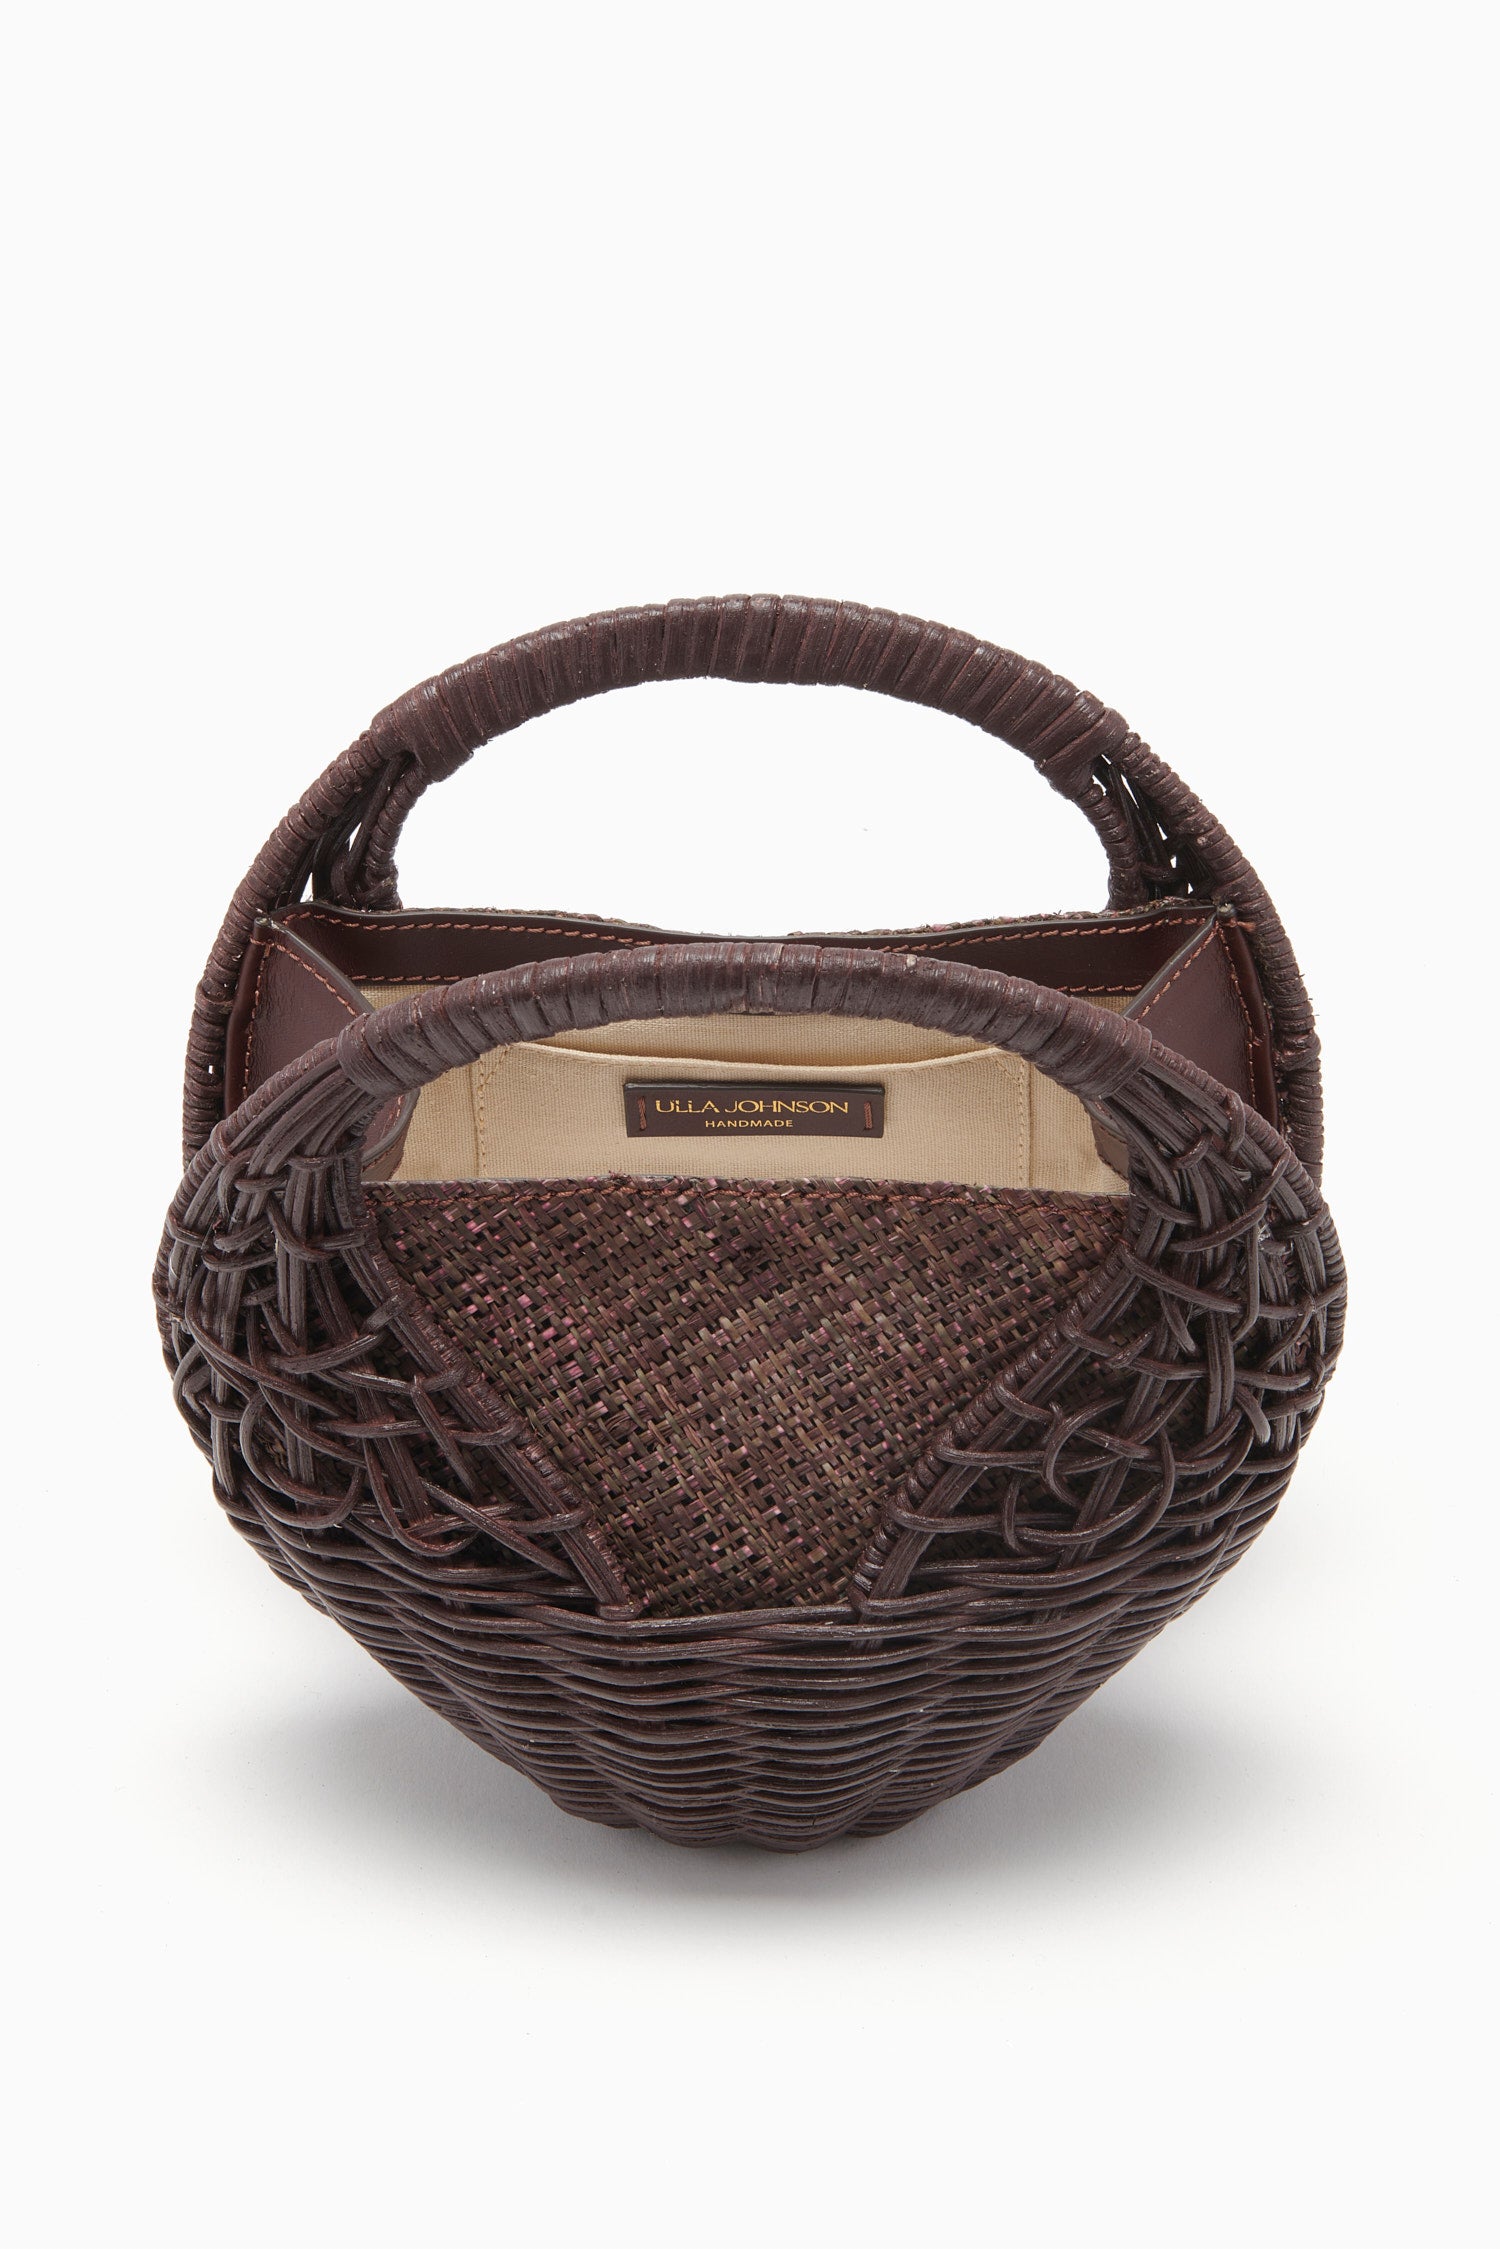 CHANEL | RATTAN WICKER BASKET SHOULDER BAG | Chanel: Handbags and  Accessories | 2020 | Sotheby's